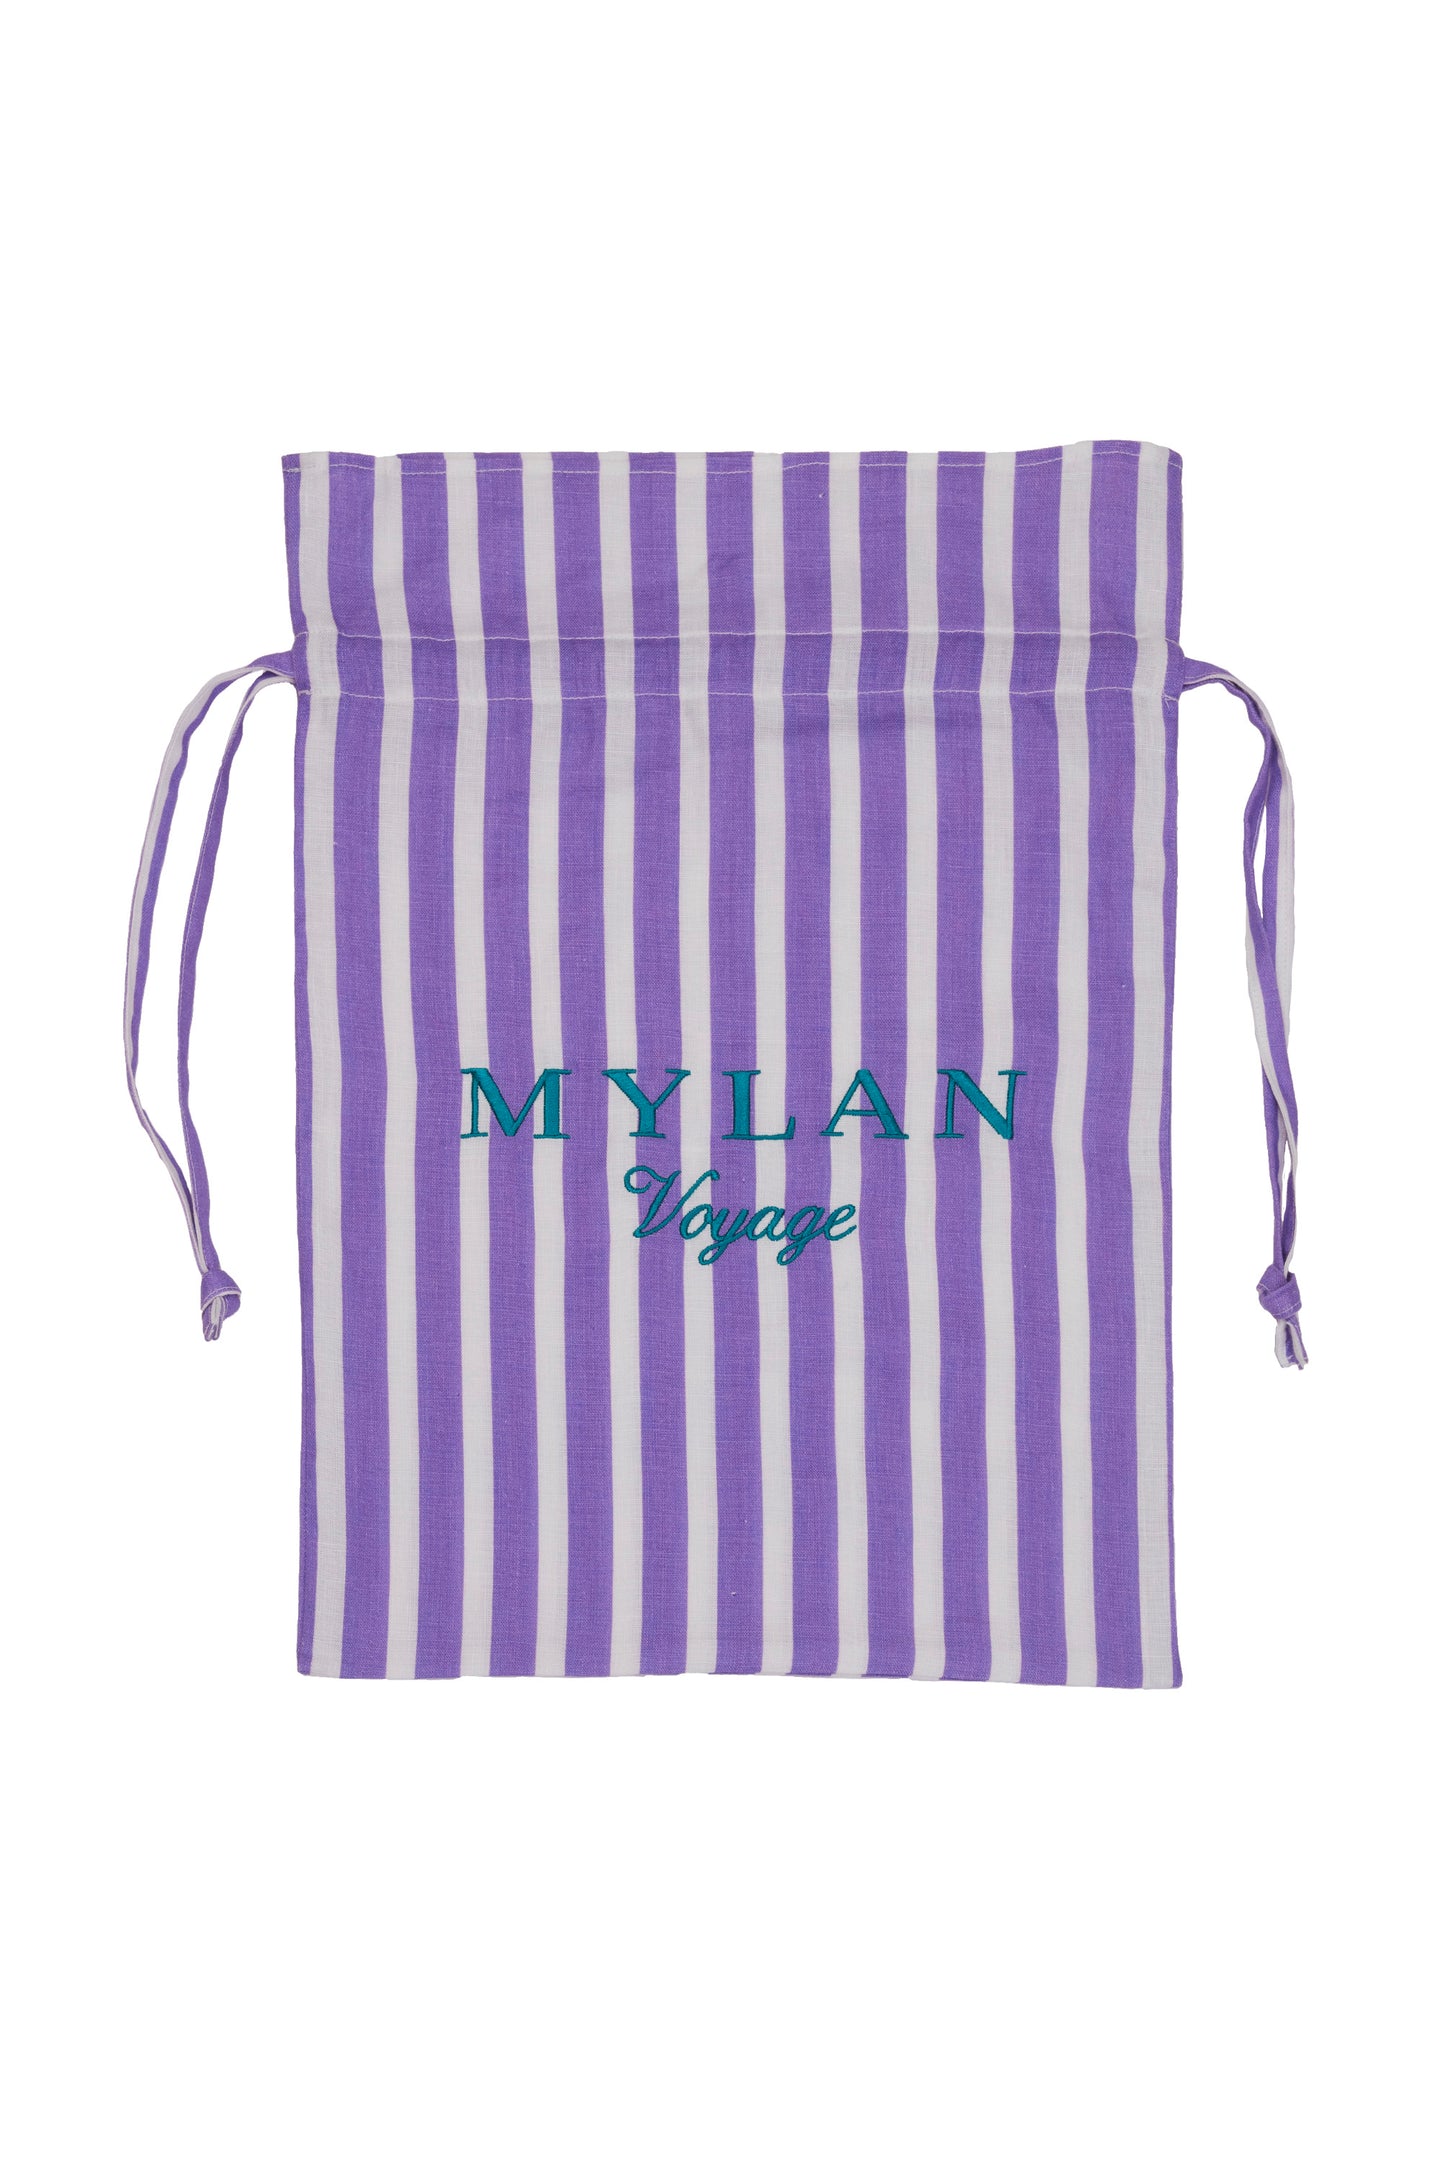 Stripe Drawstring Bag | Lilac